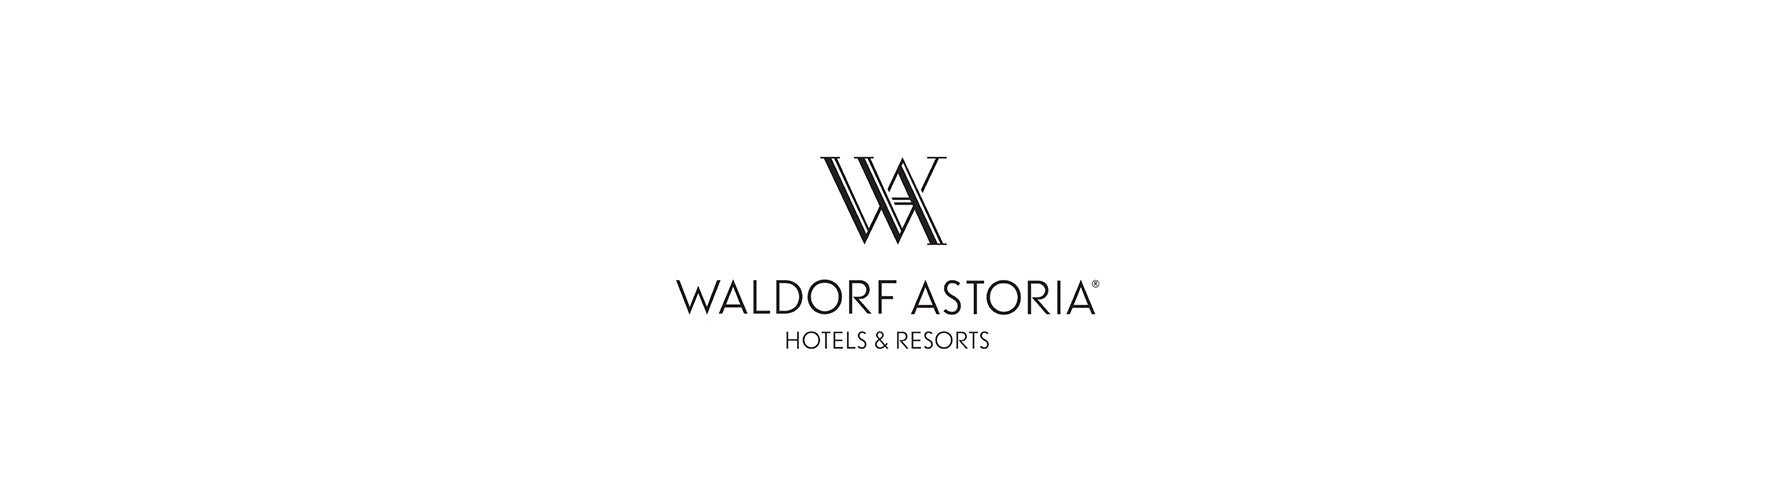 Waldorf Astoria logo.